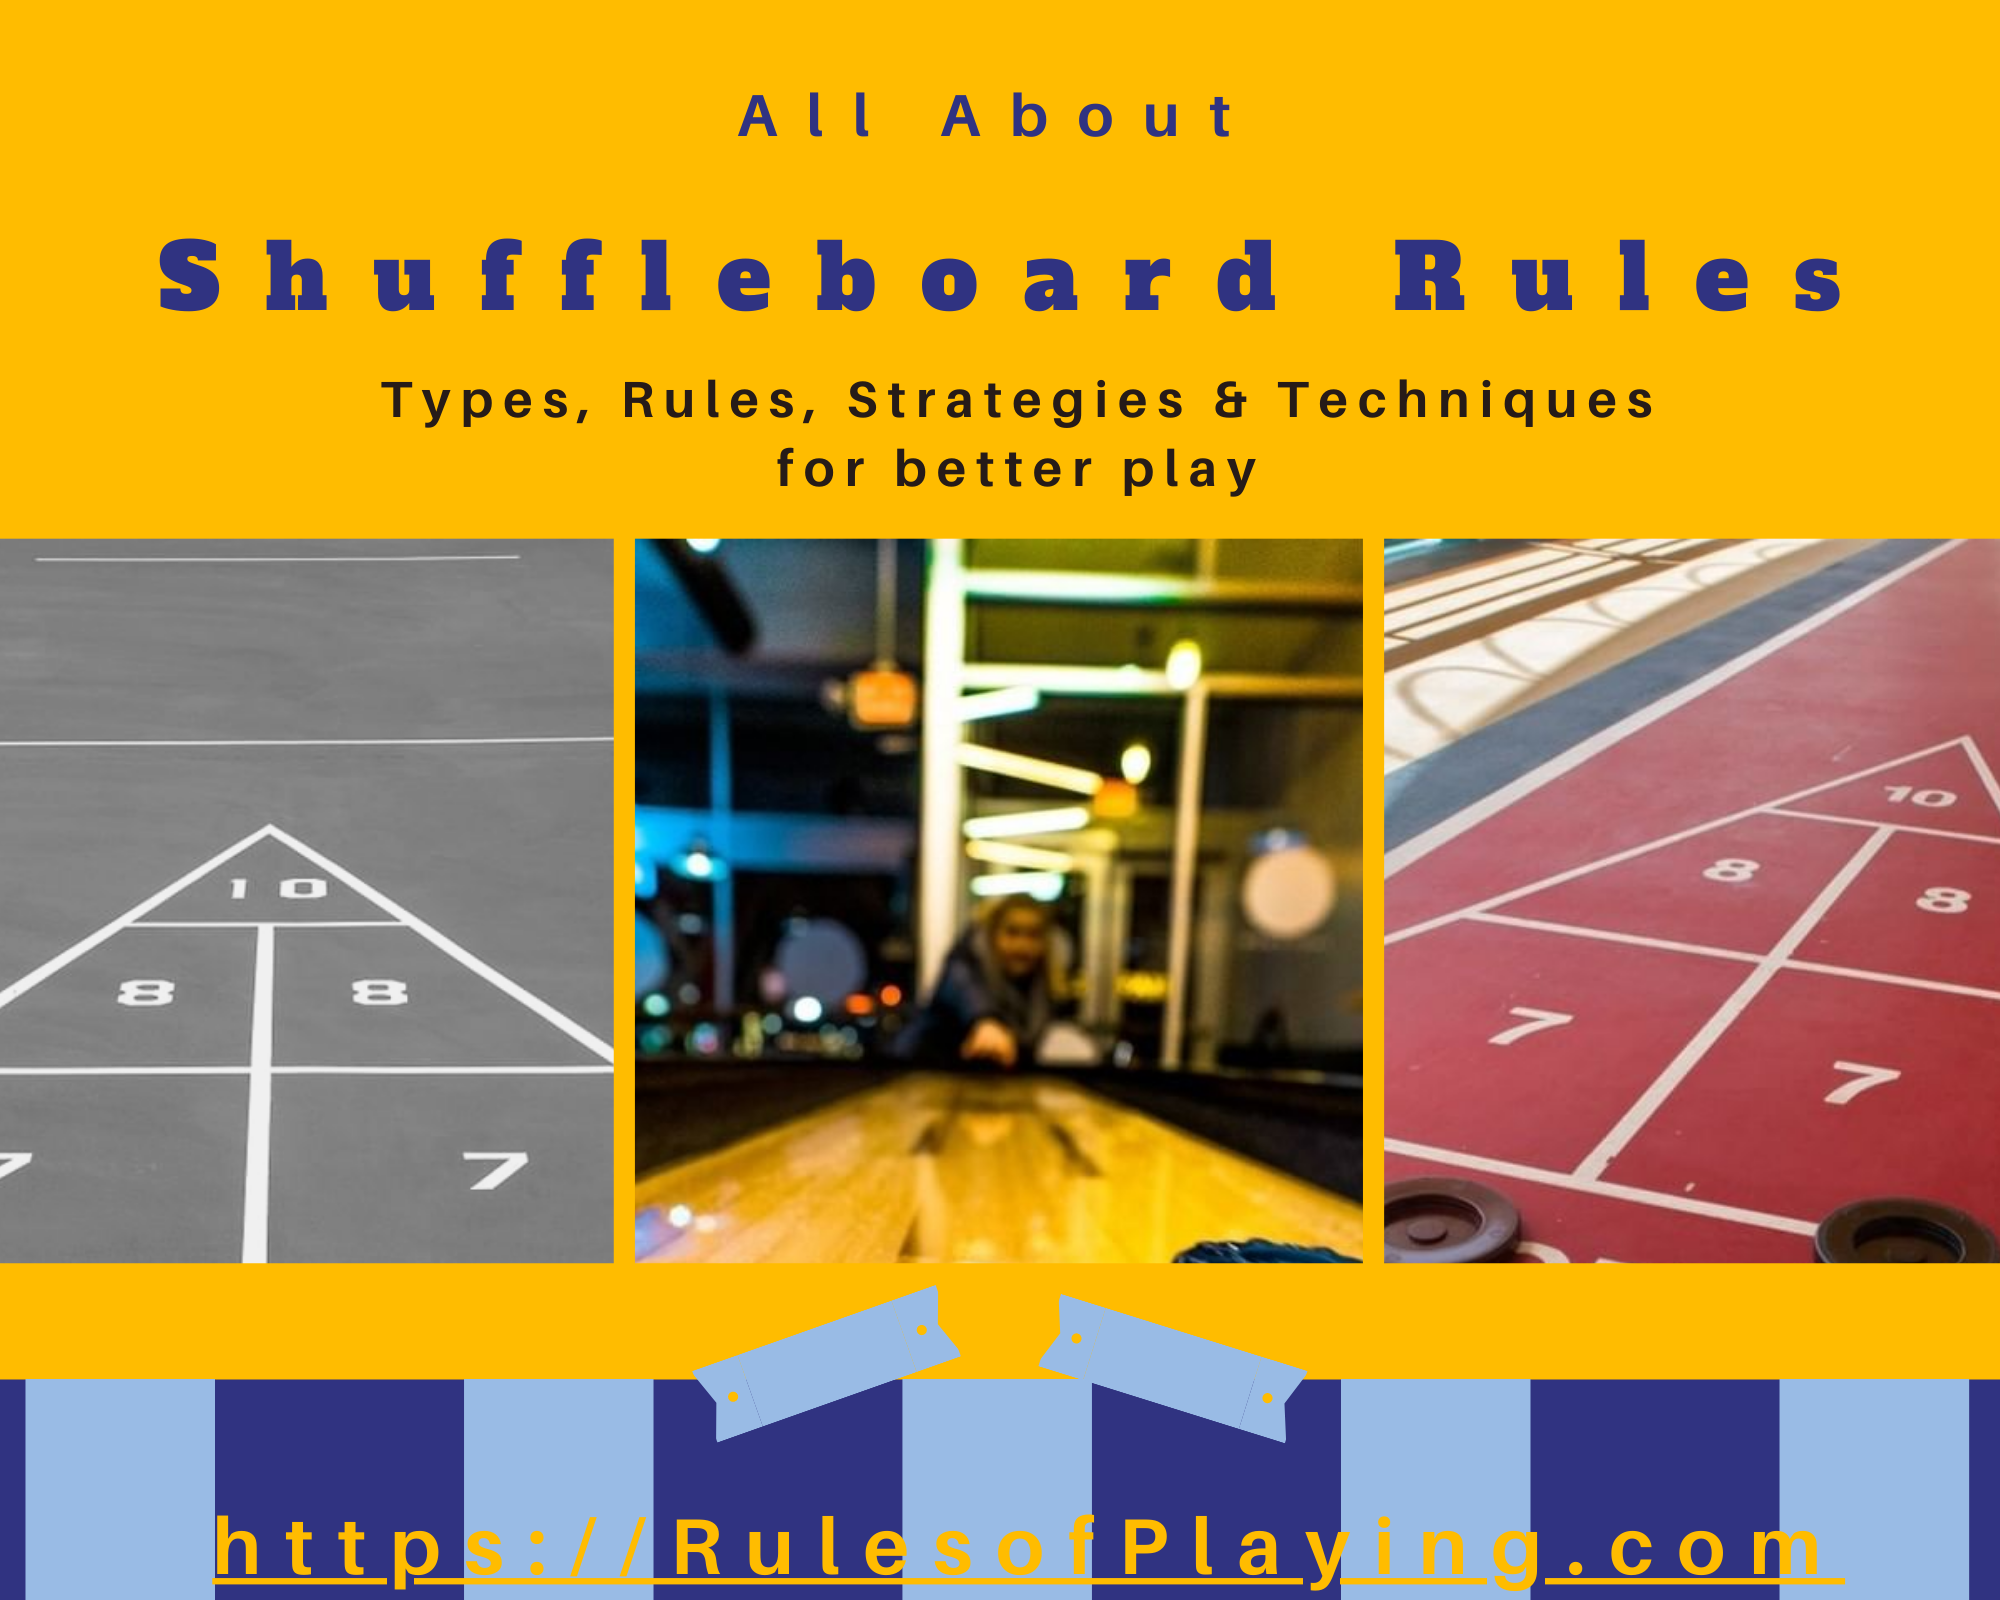 Shuffleboard rules for Indoor and outdoor shuffleboard playing